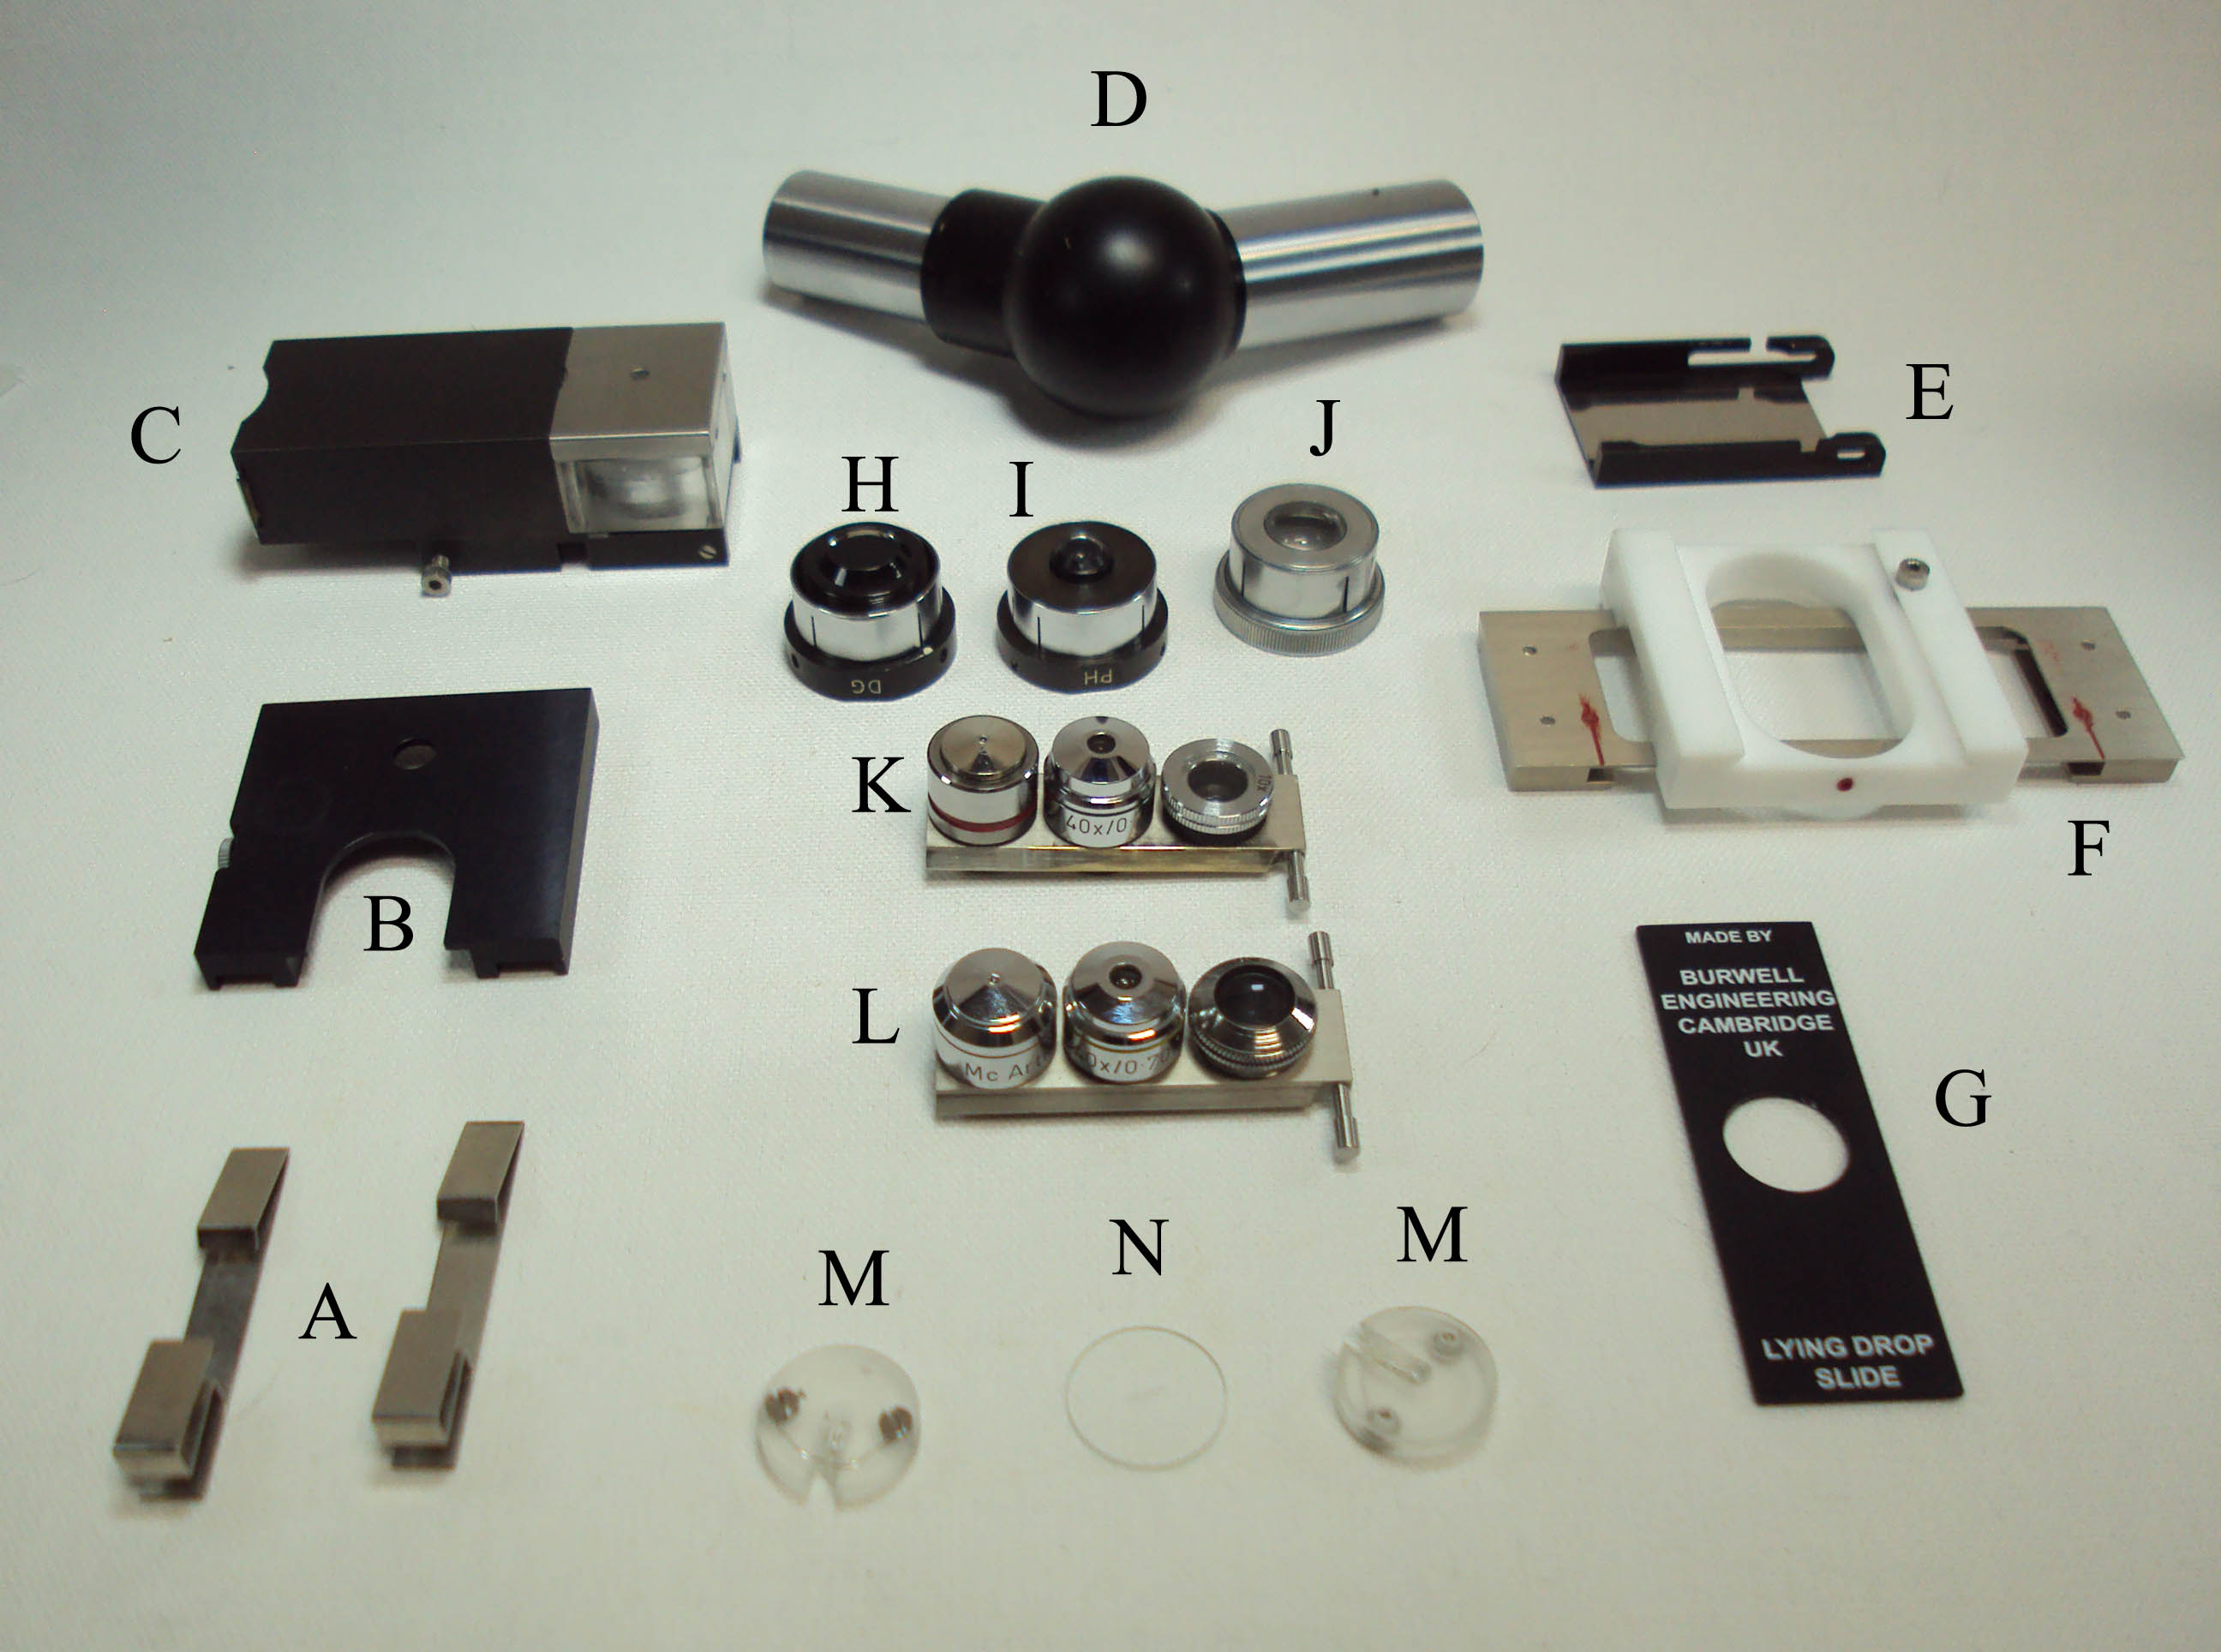 Kirk-McArthur Portable  Microscope Accessories